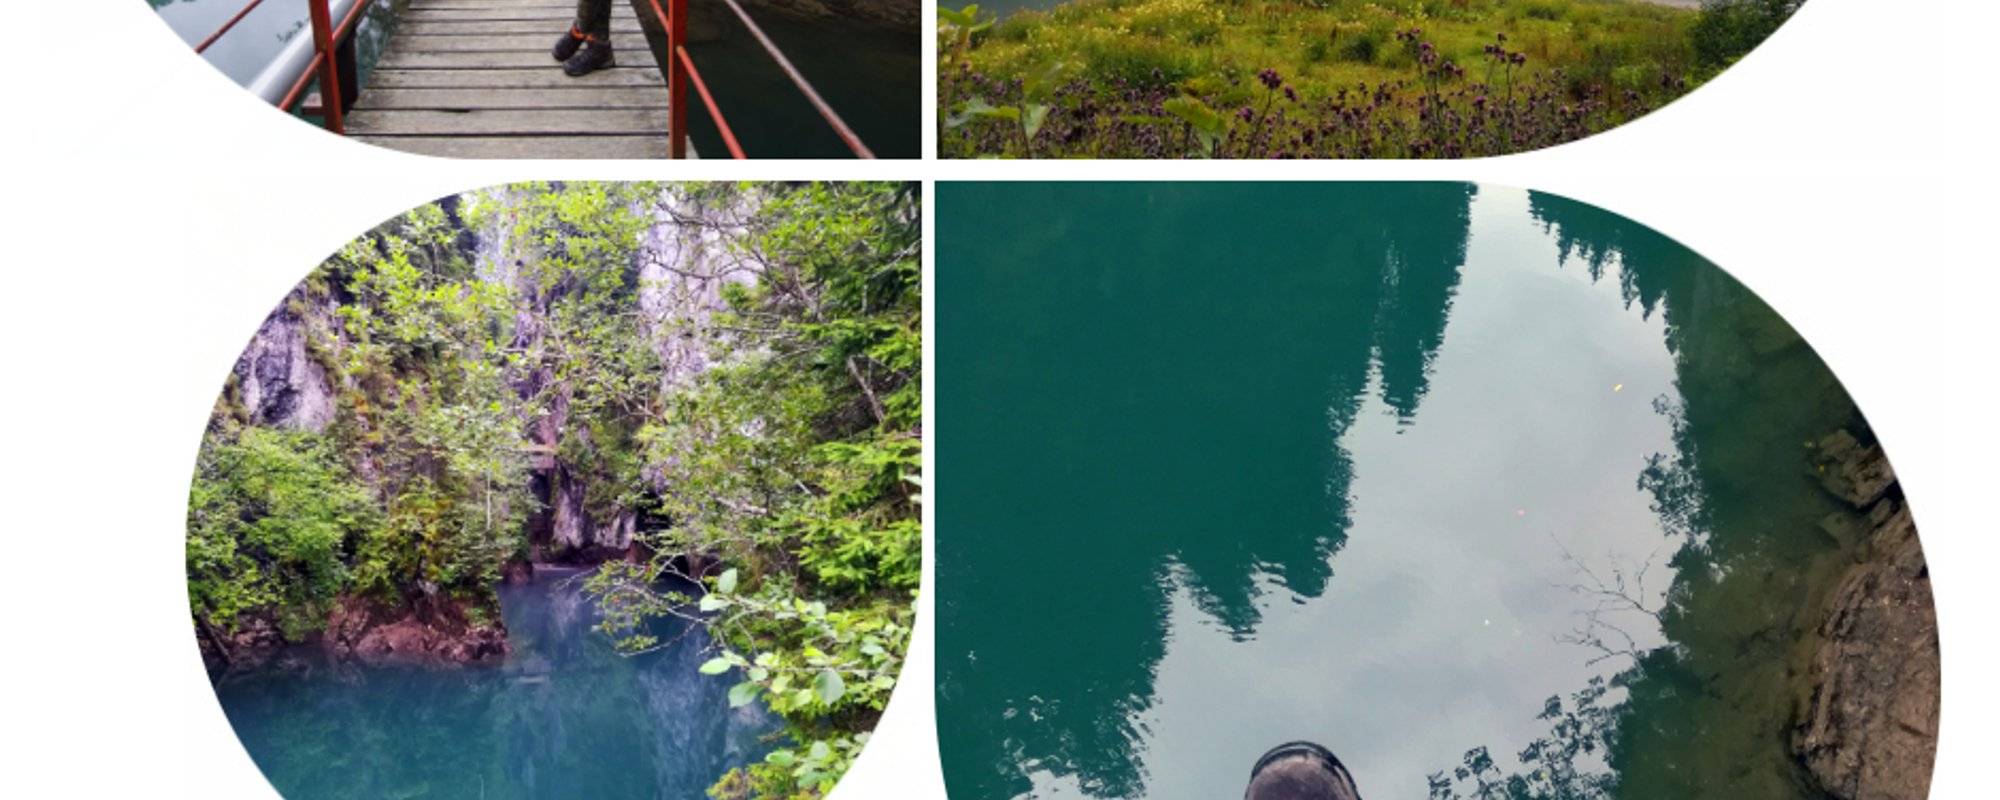 Let's travel together #111 - Lacul Scropoasa (Scropoasa Lake)